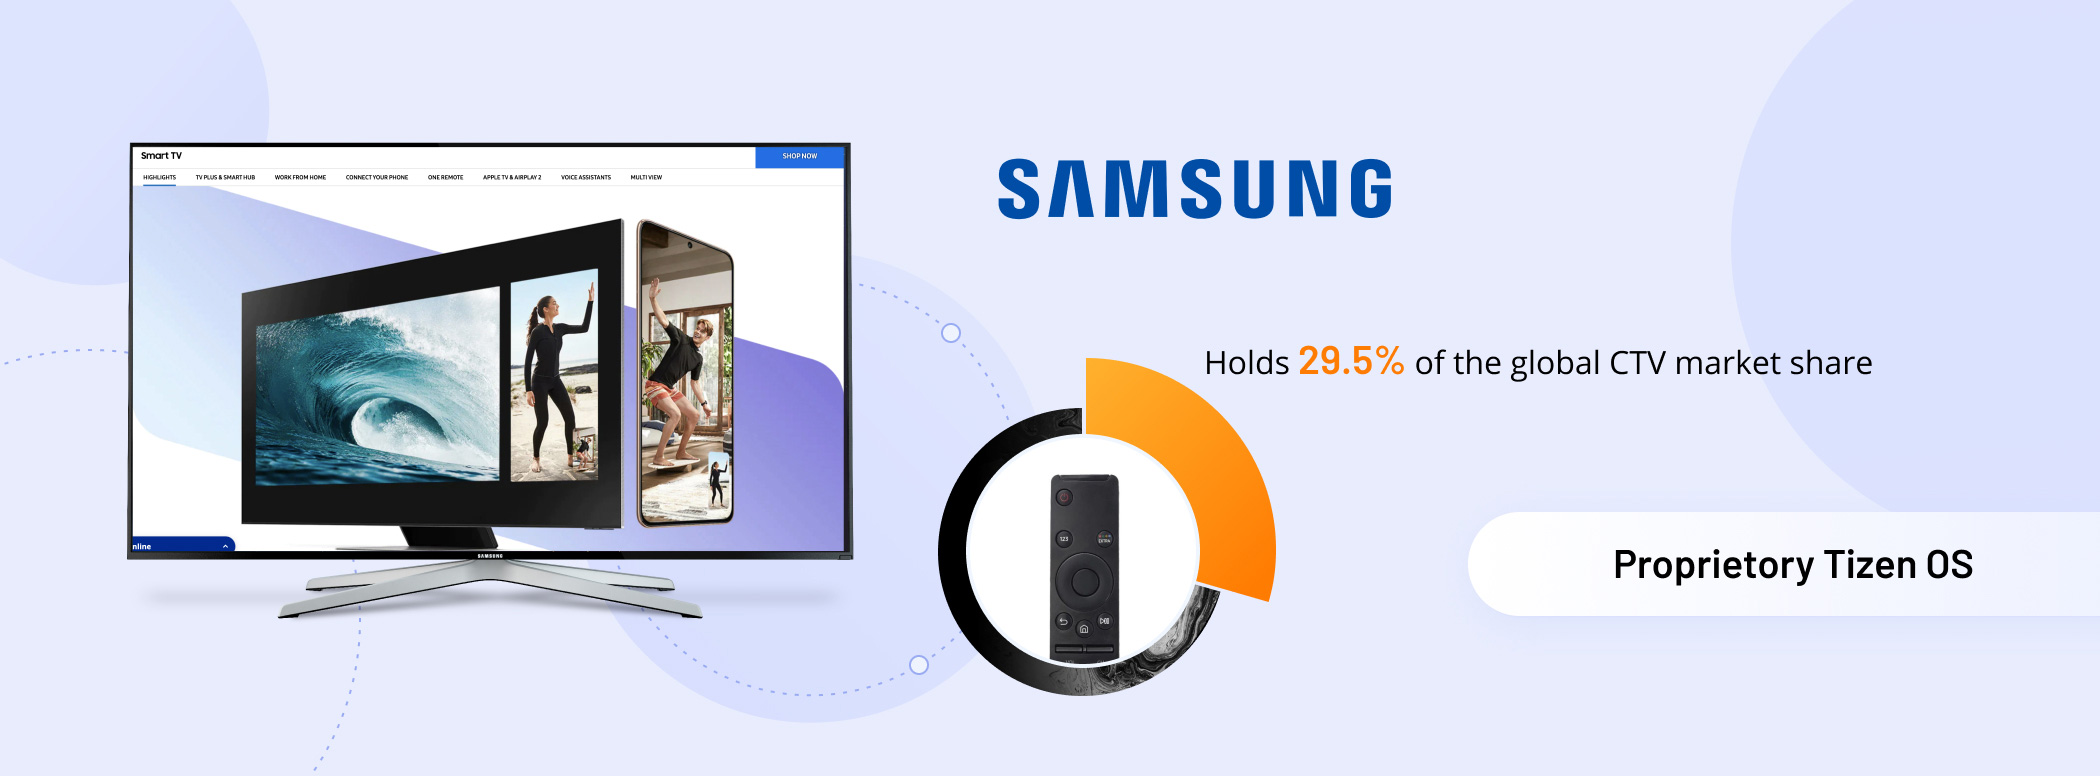 Samsung Connected TV - Xenoss blog